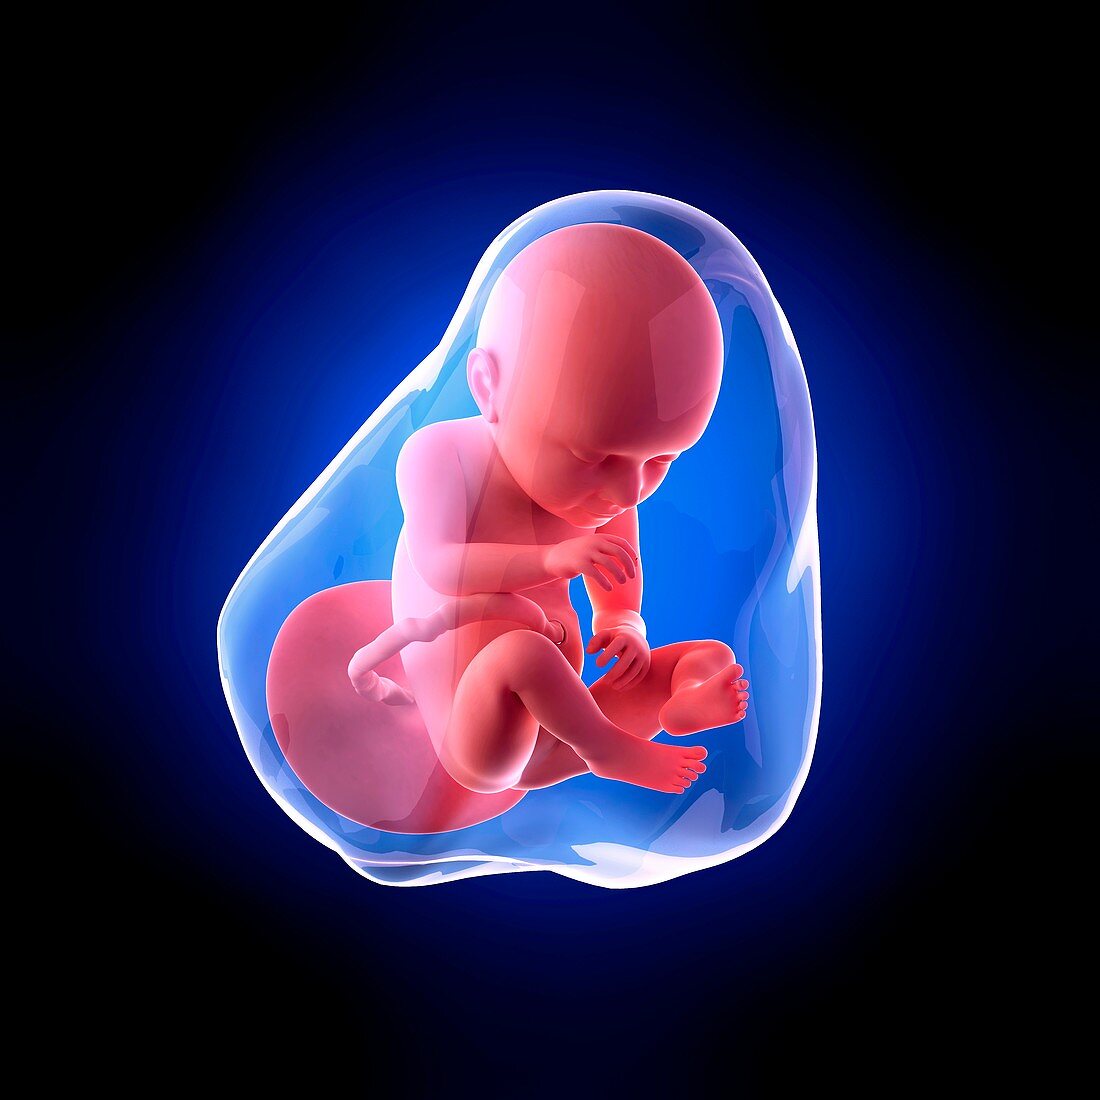 Human fetus age 37 weeks